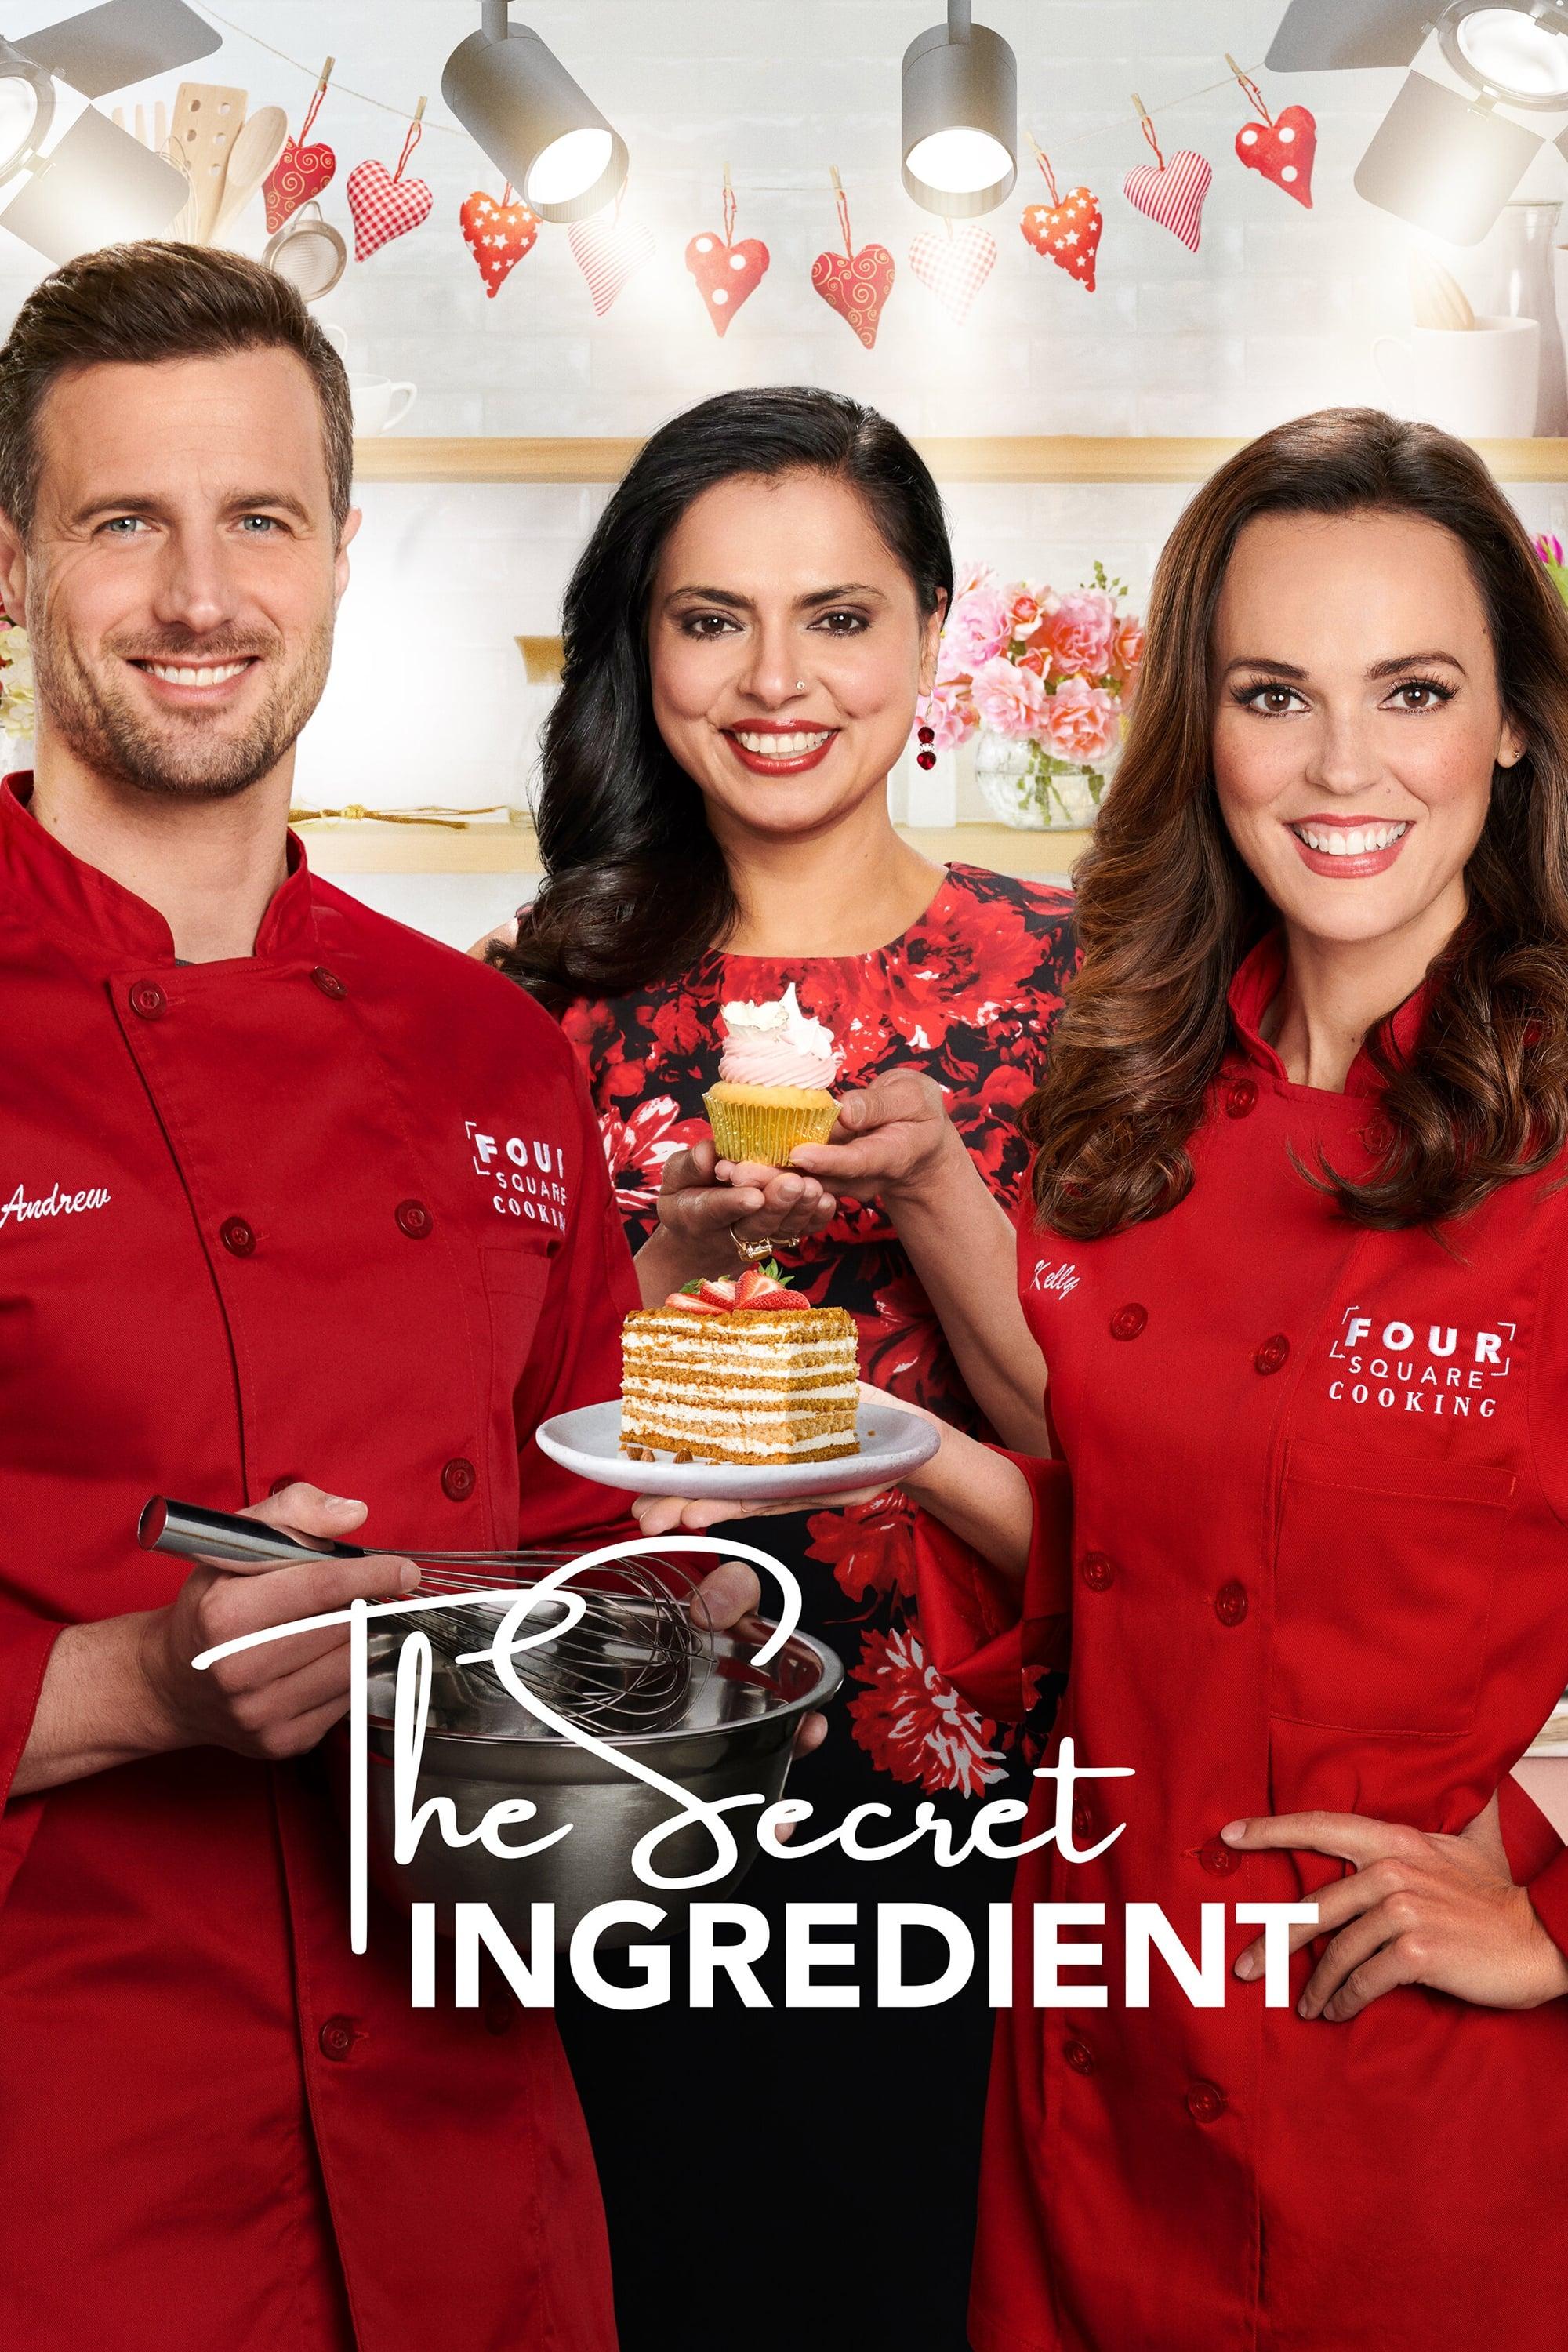 The Secret Ingredient poster